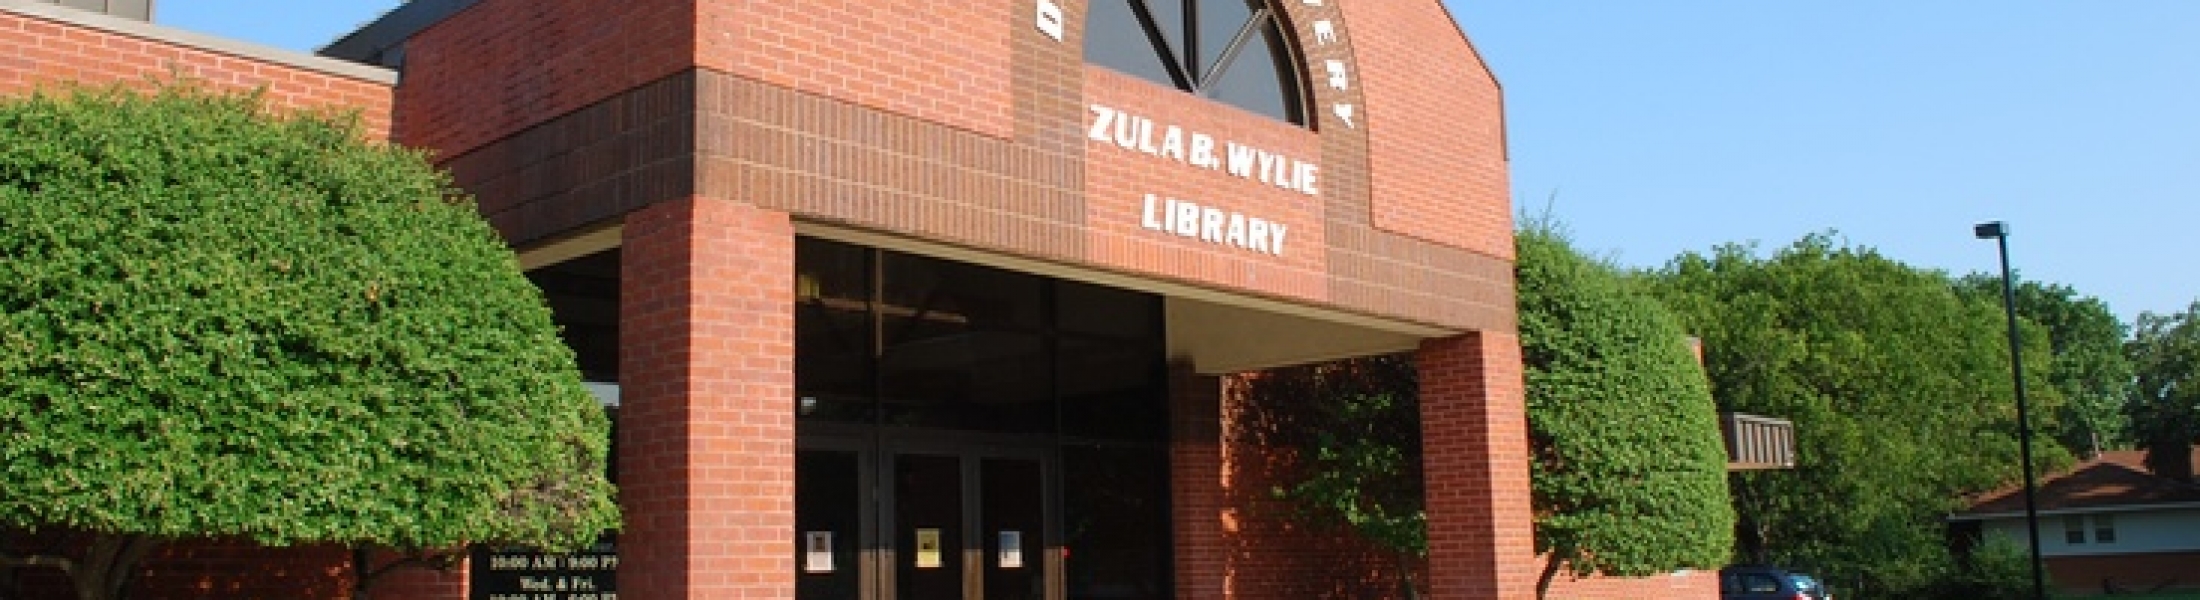 zula b.wylie public library